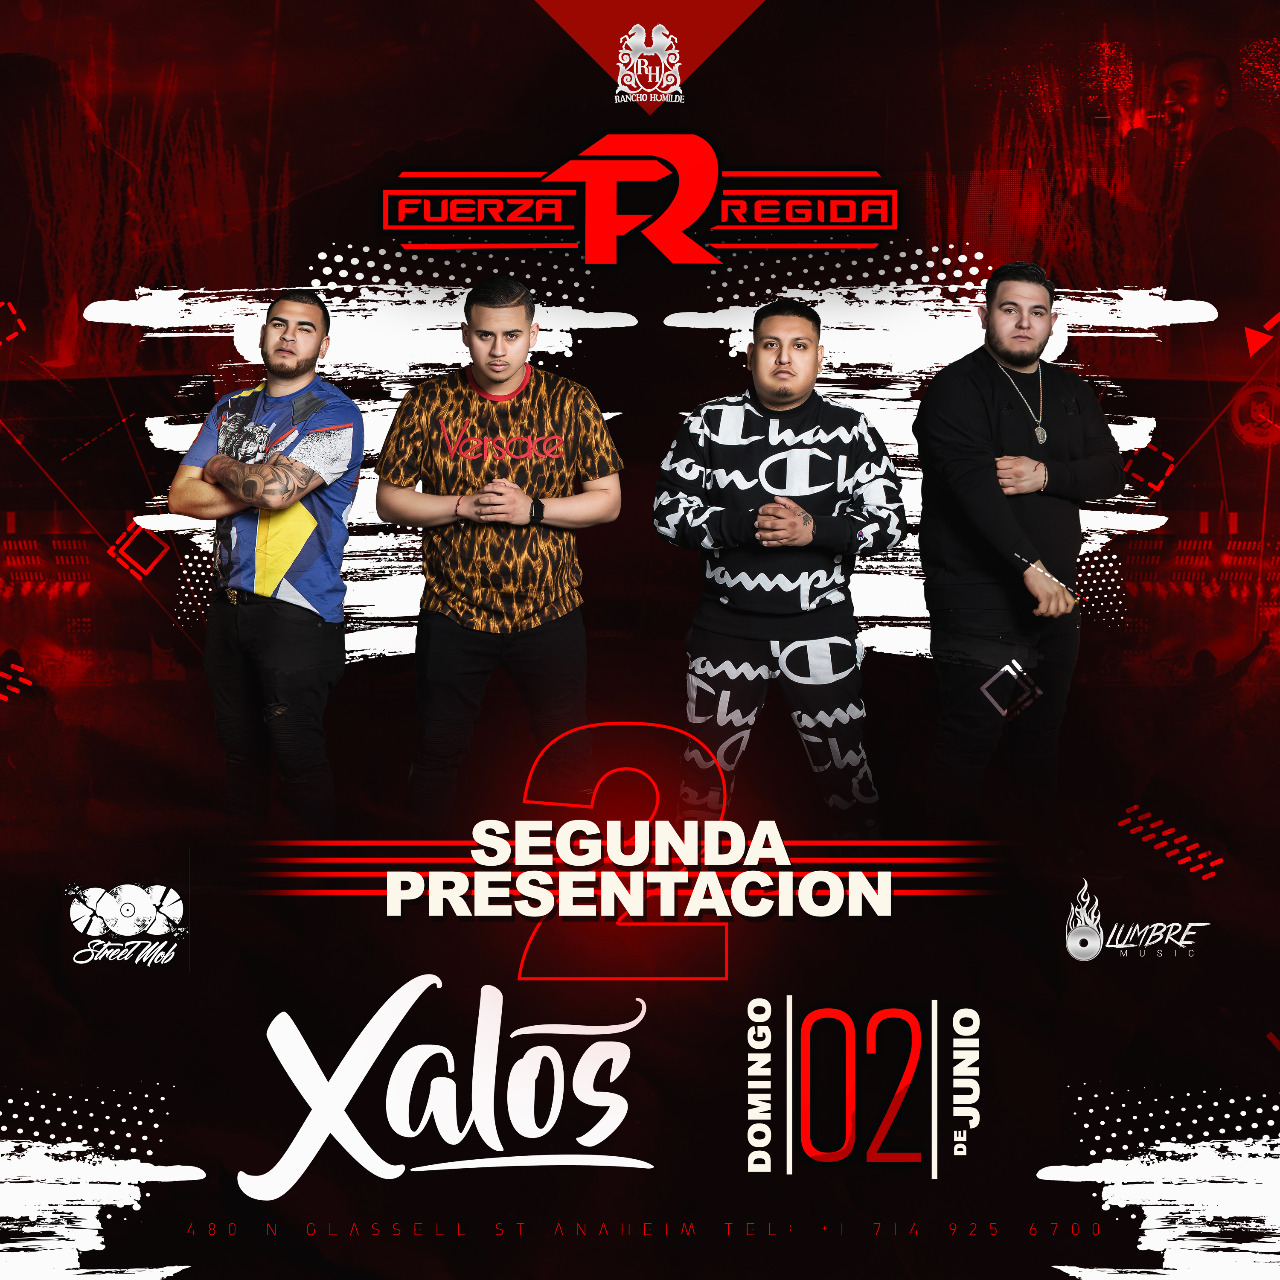 FUERZA REGIDA Tickets The Xalos Night Club on June 02 2019 in Anaheim